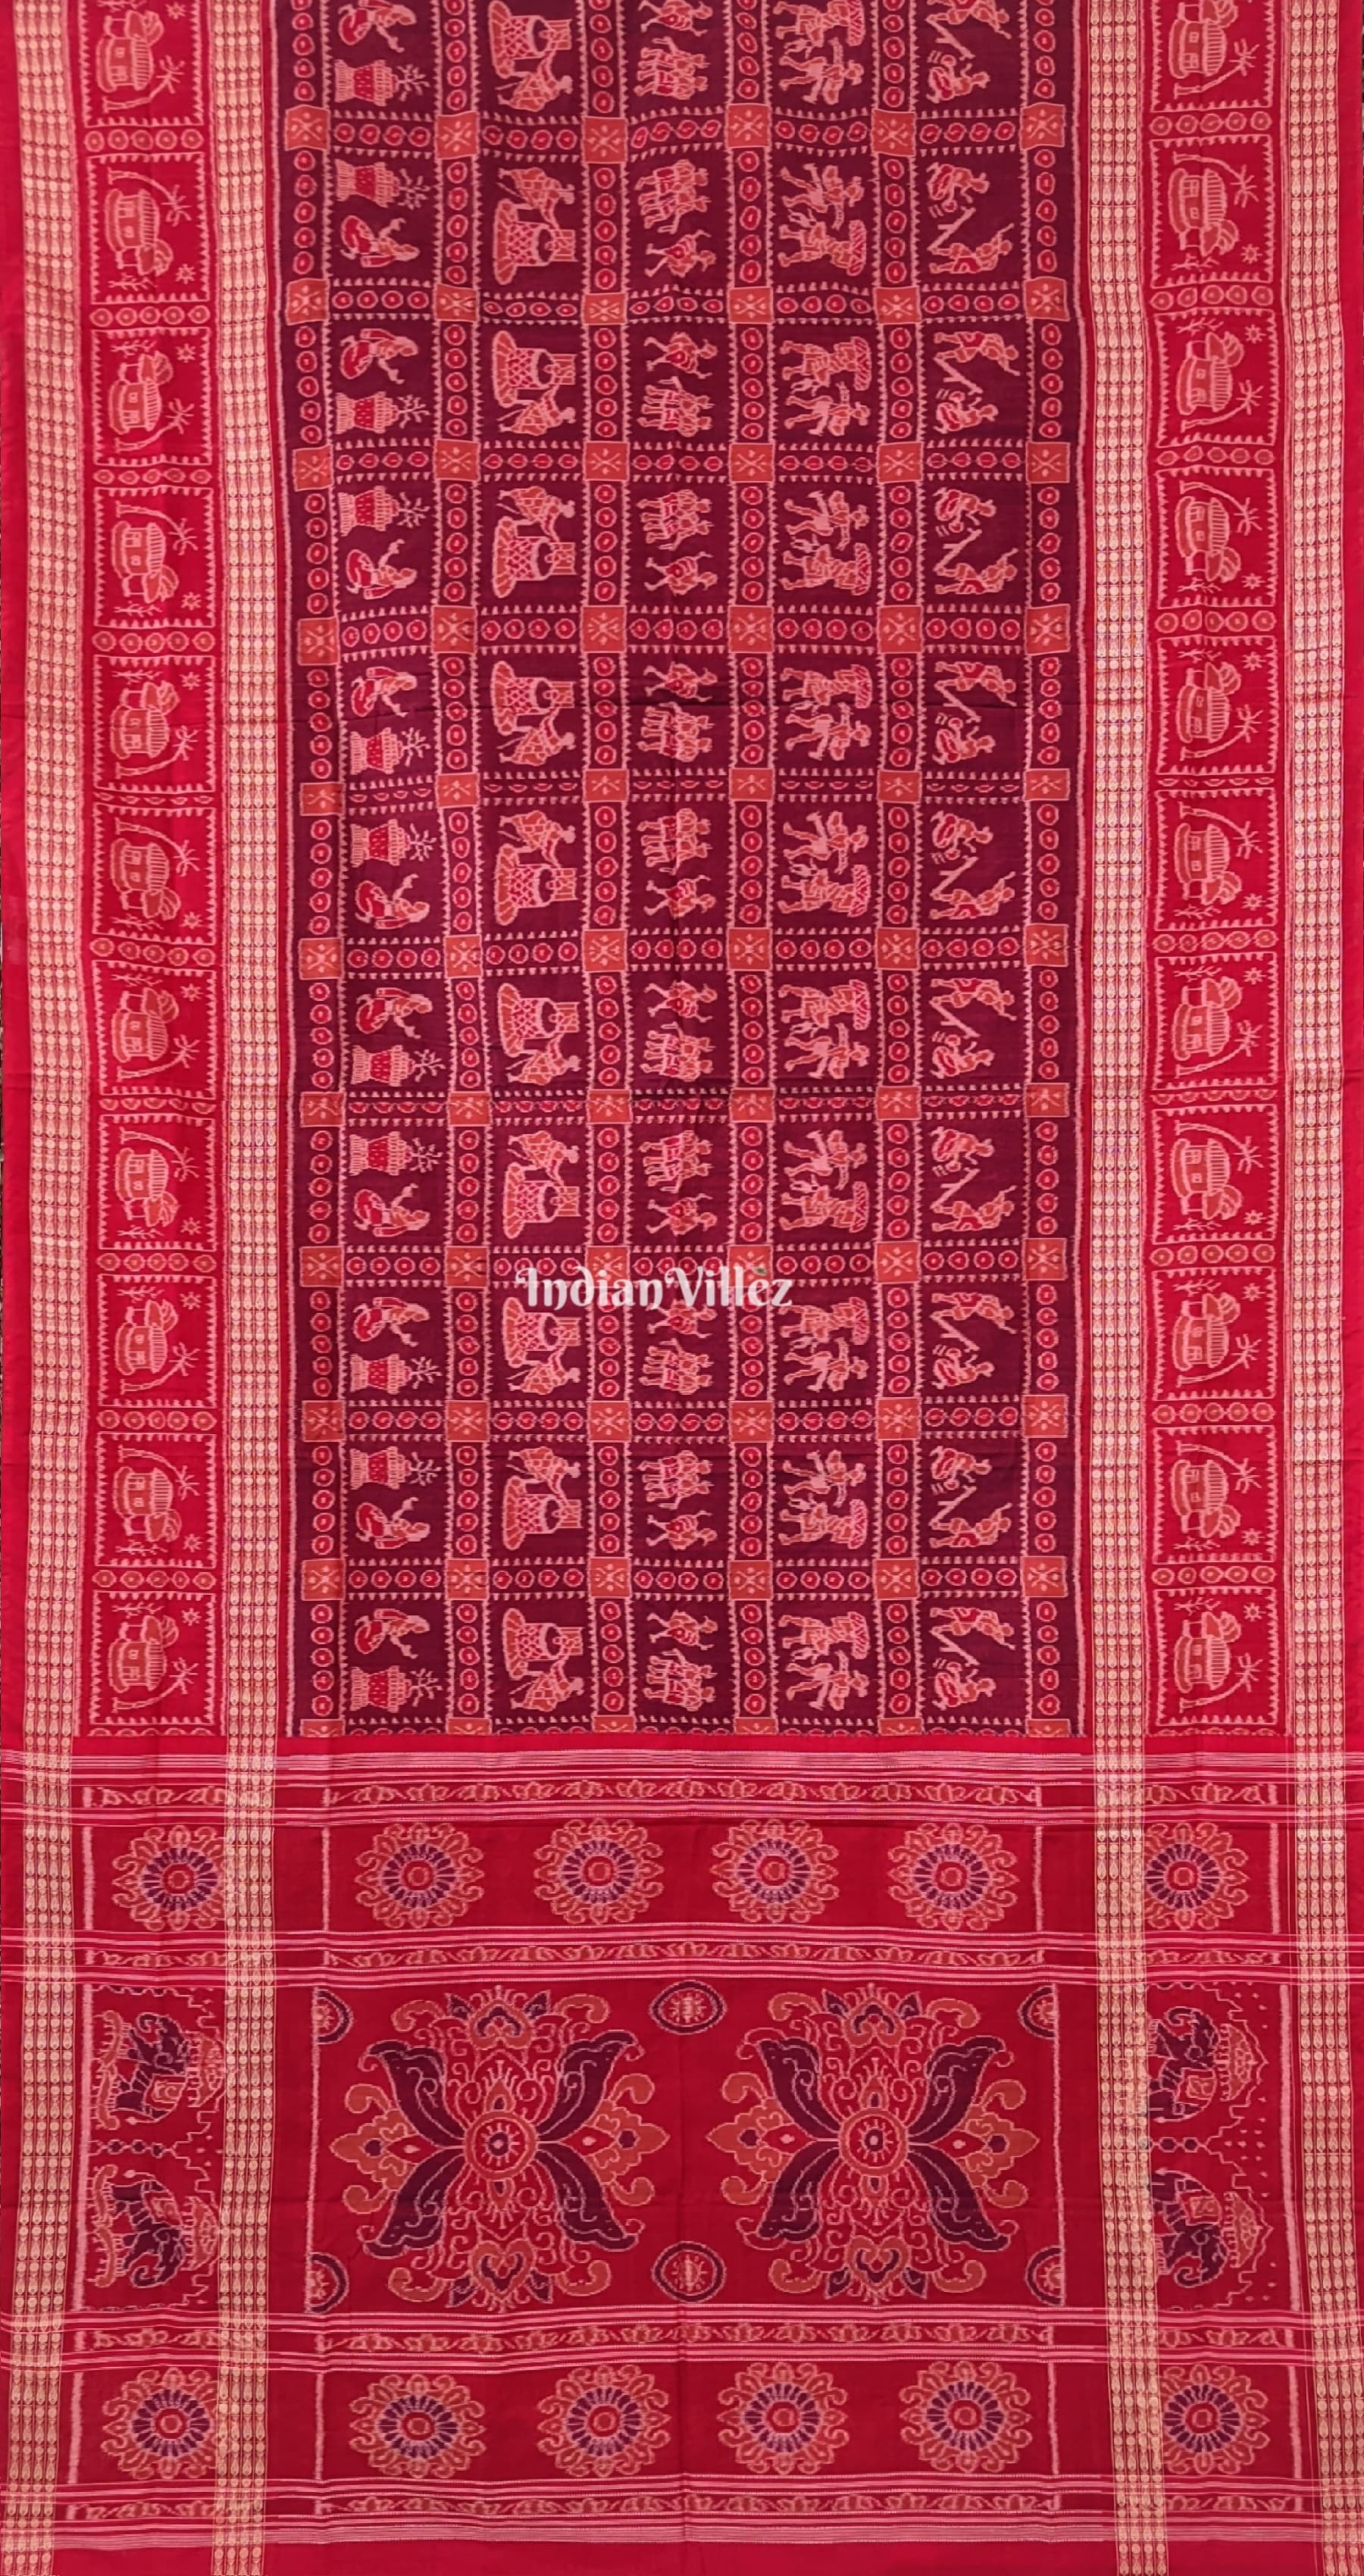 Red Trditional work Sambalpuri Cotton Saree